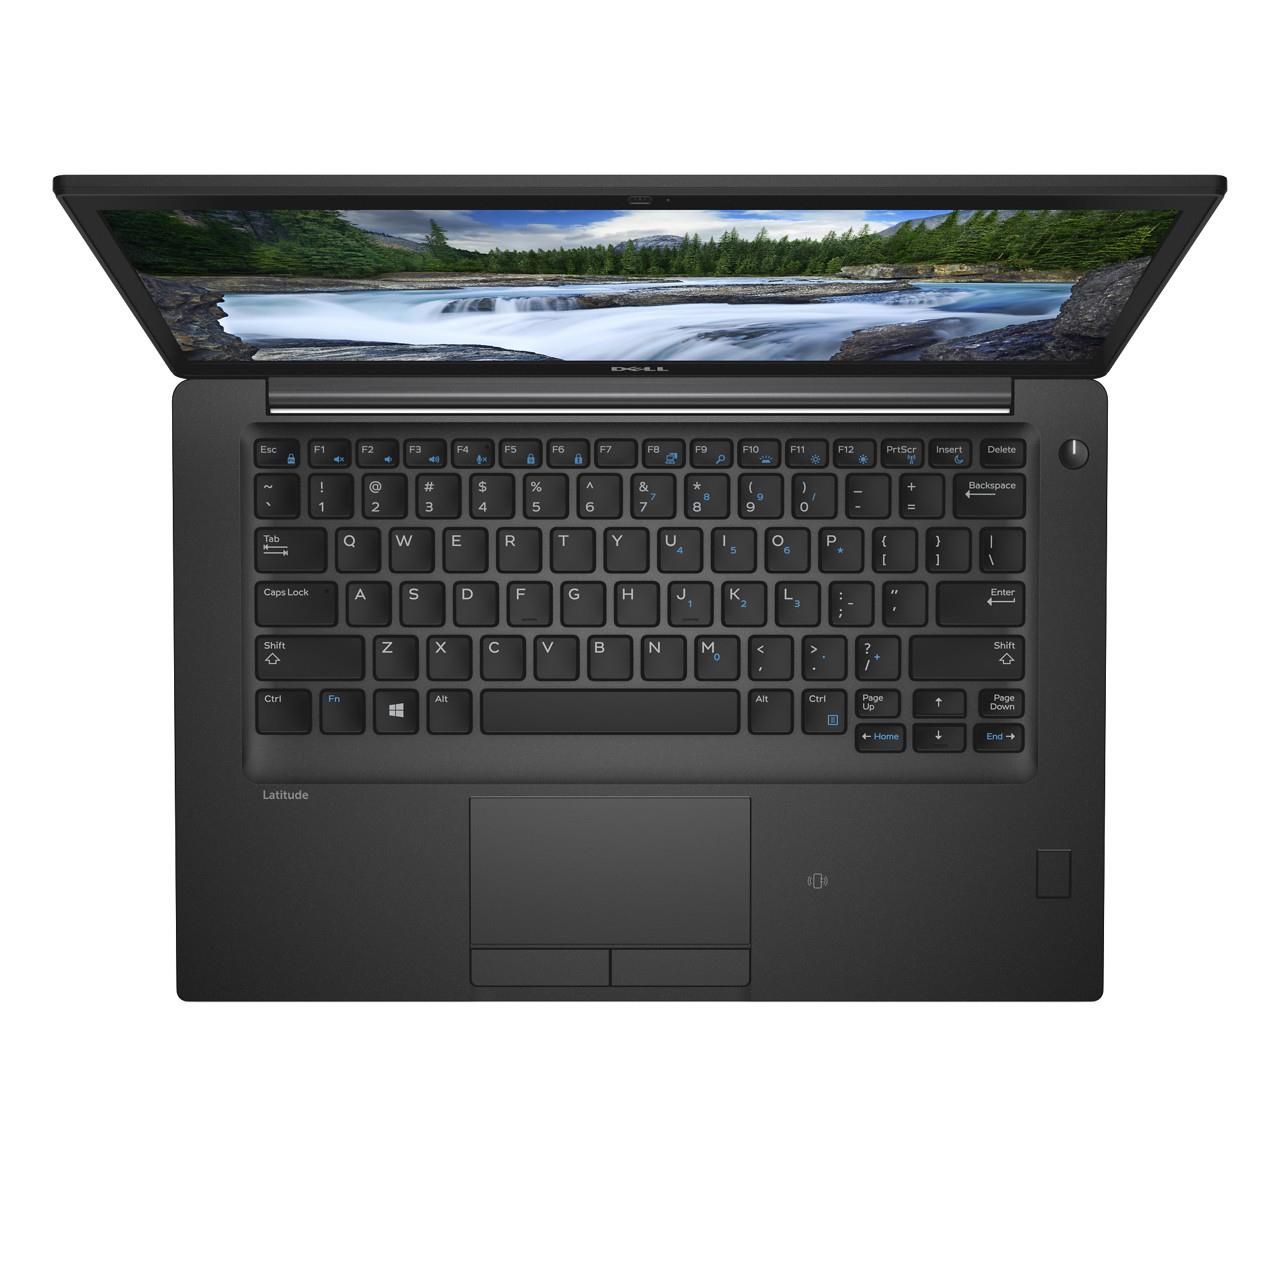 Laptop Dell Latitude E7490 I7 8650U 16GB 512SSD 14FHD W10P Blakc - Hàng nhập khẩu